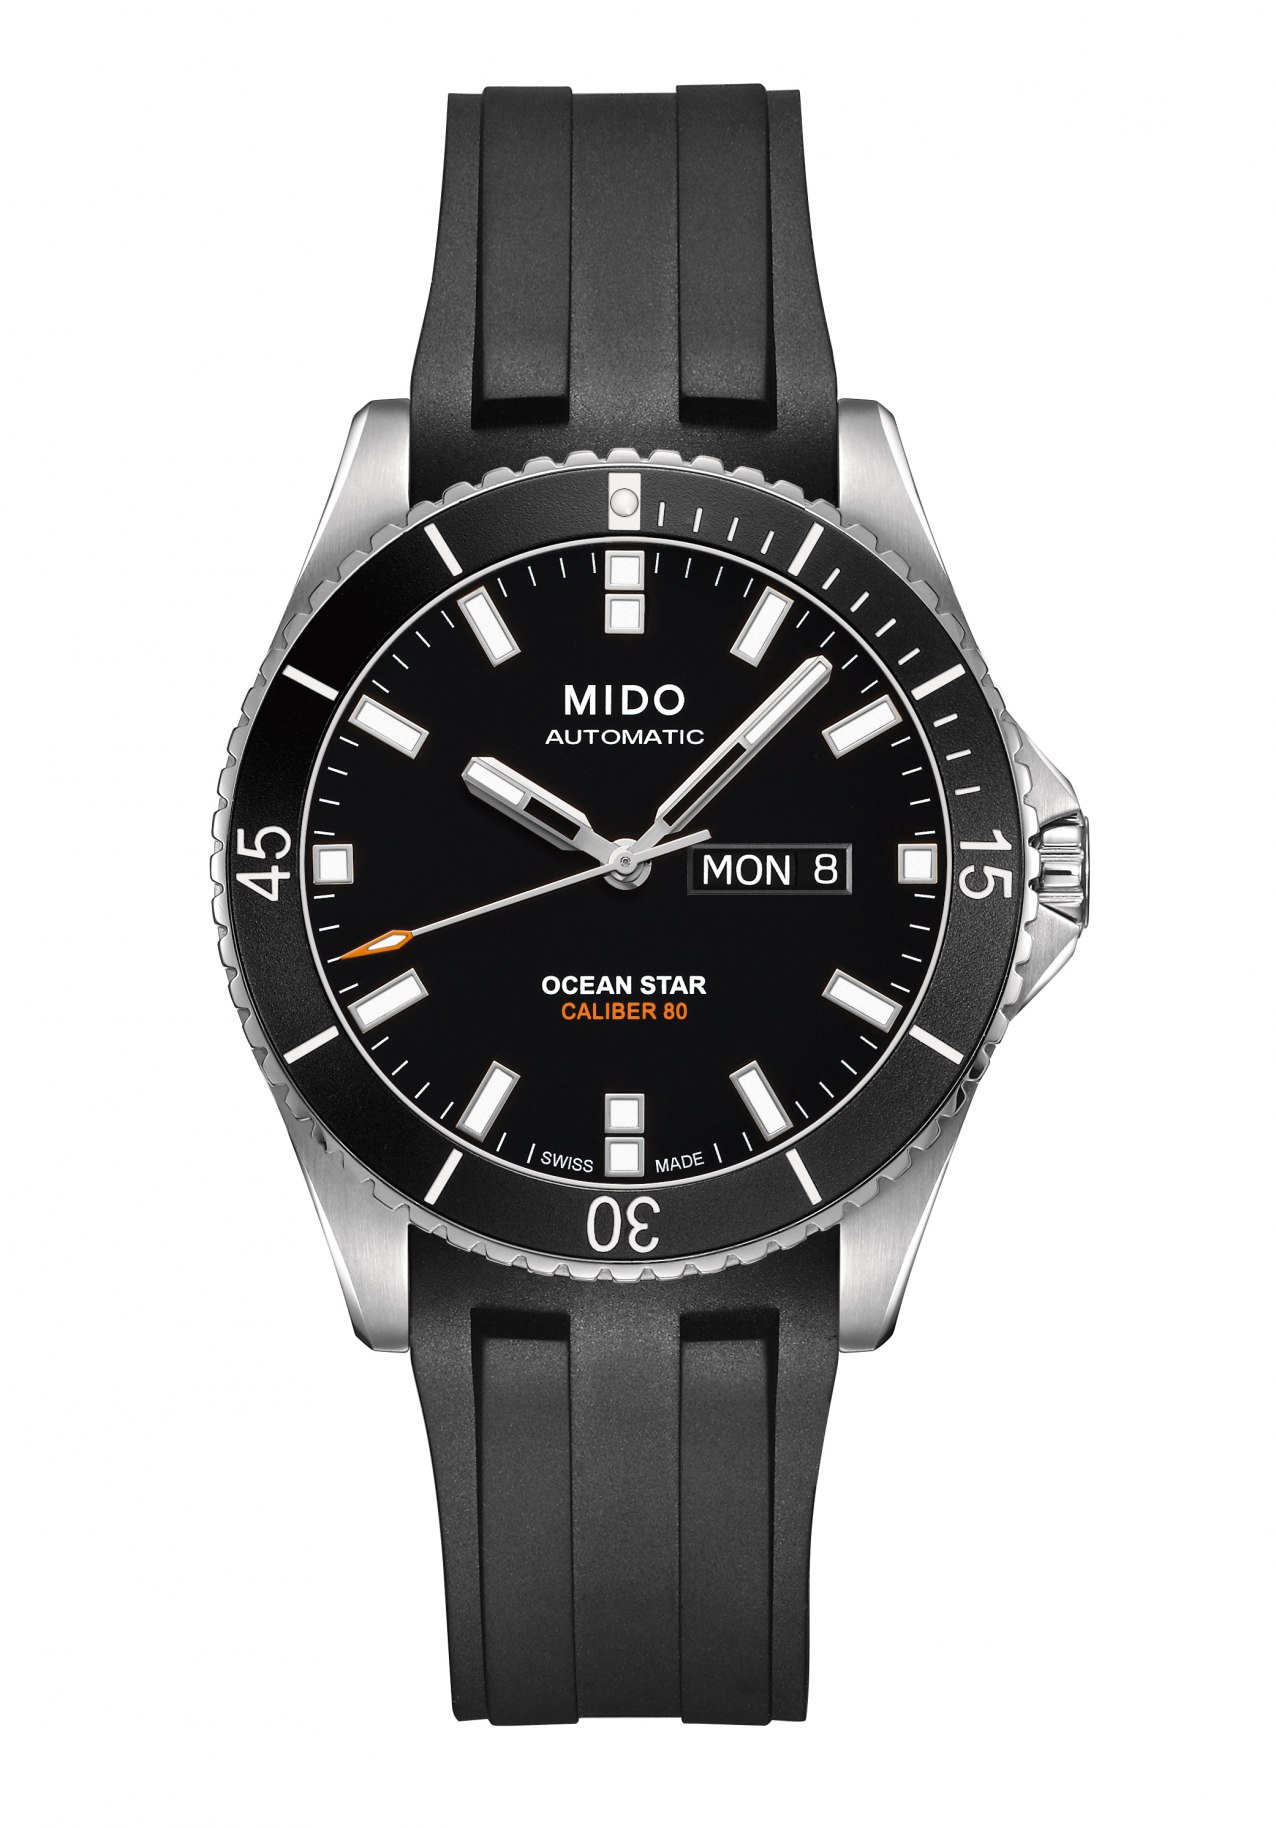 Mido Ocean Star Captain Automatic Watch M026.430.17.051.00 nur 890.00